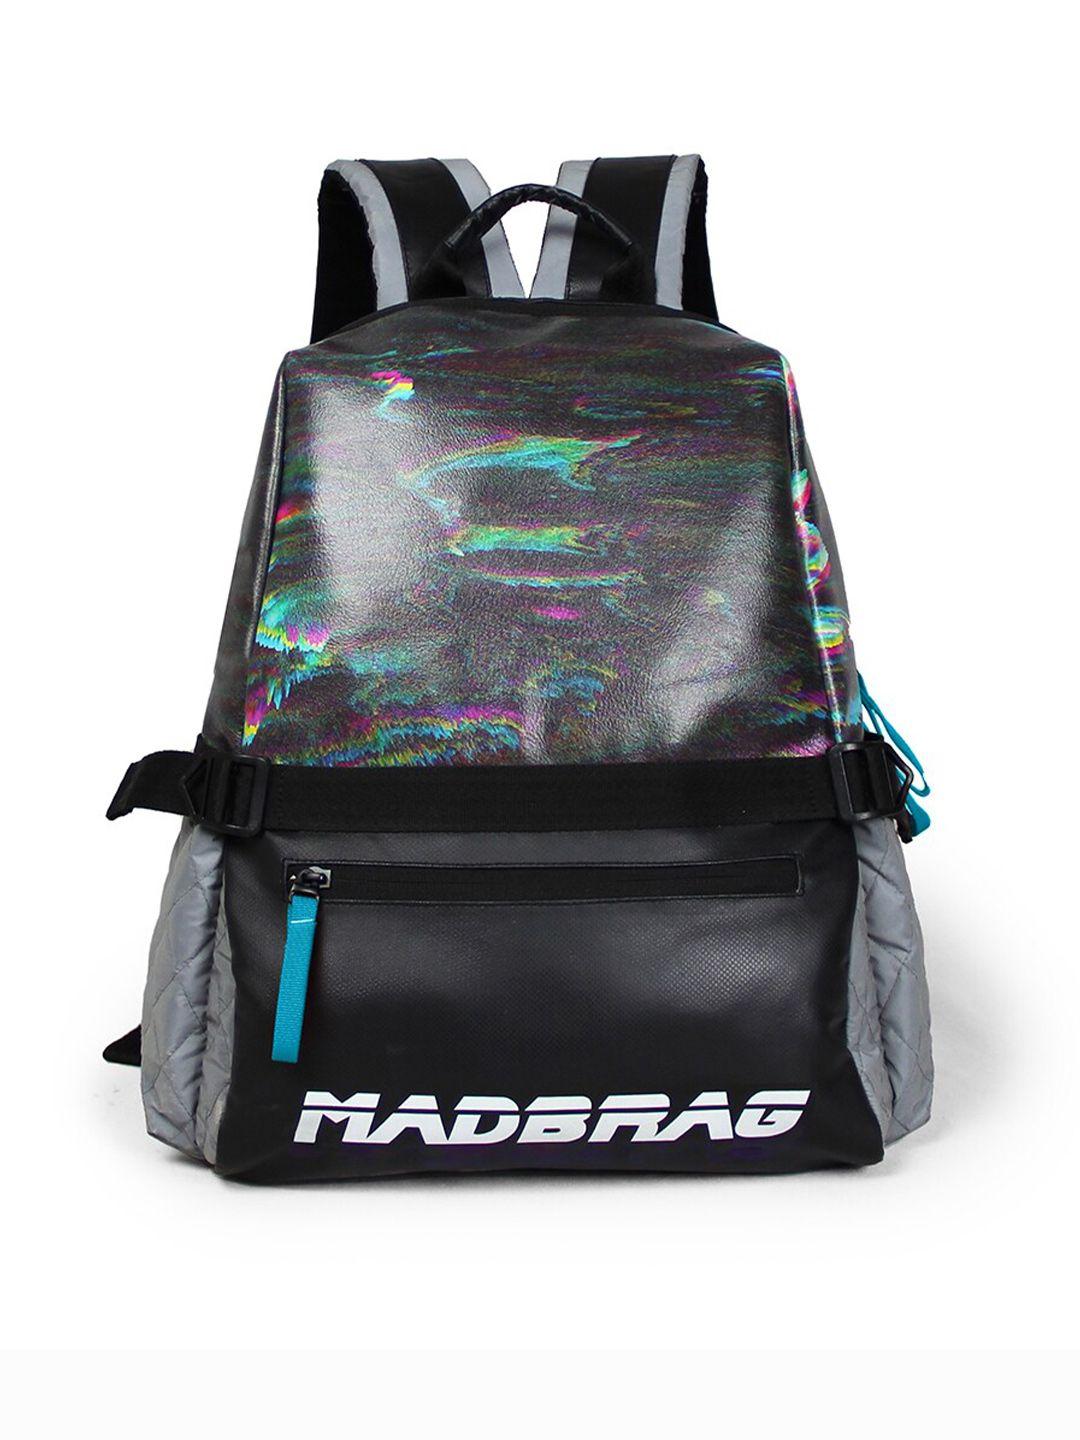 madbrag graphic backpack